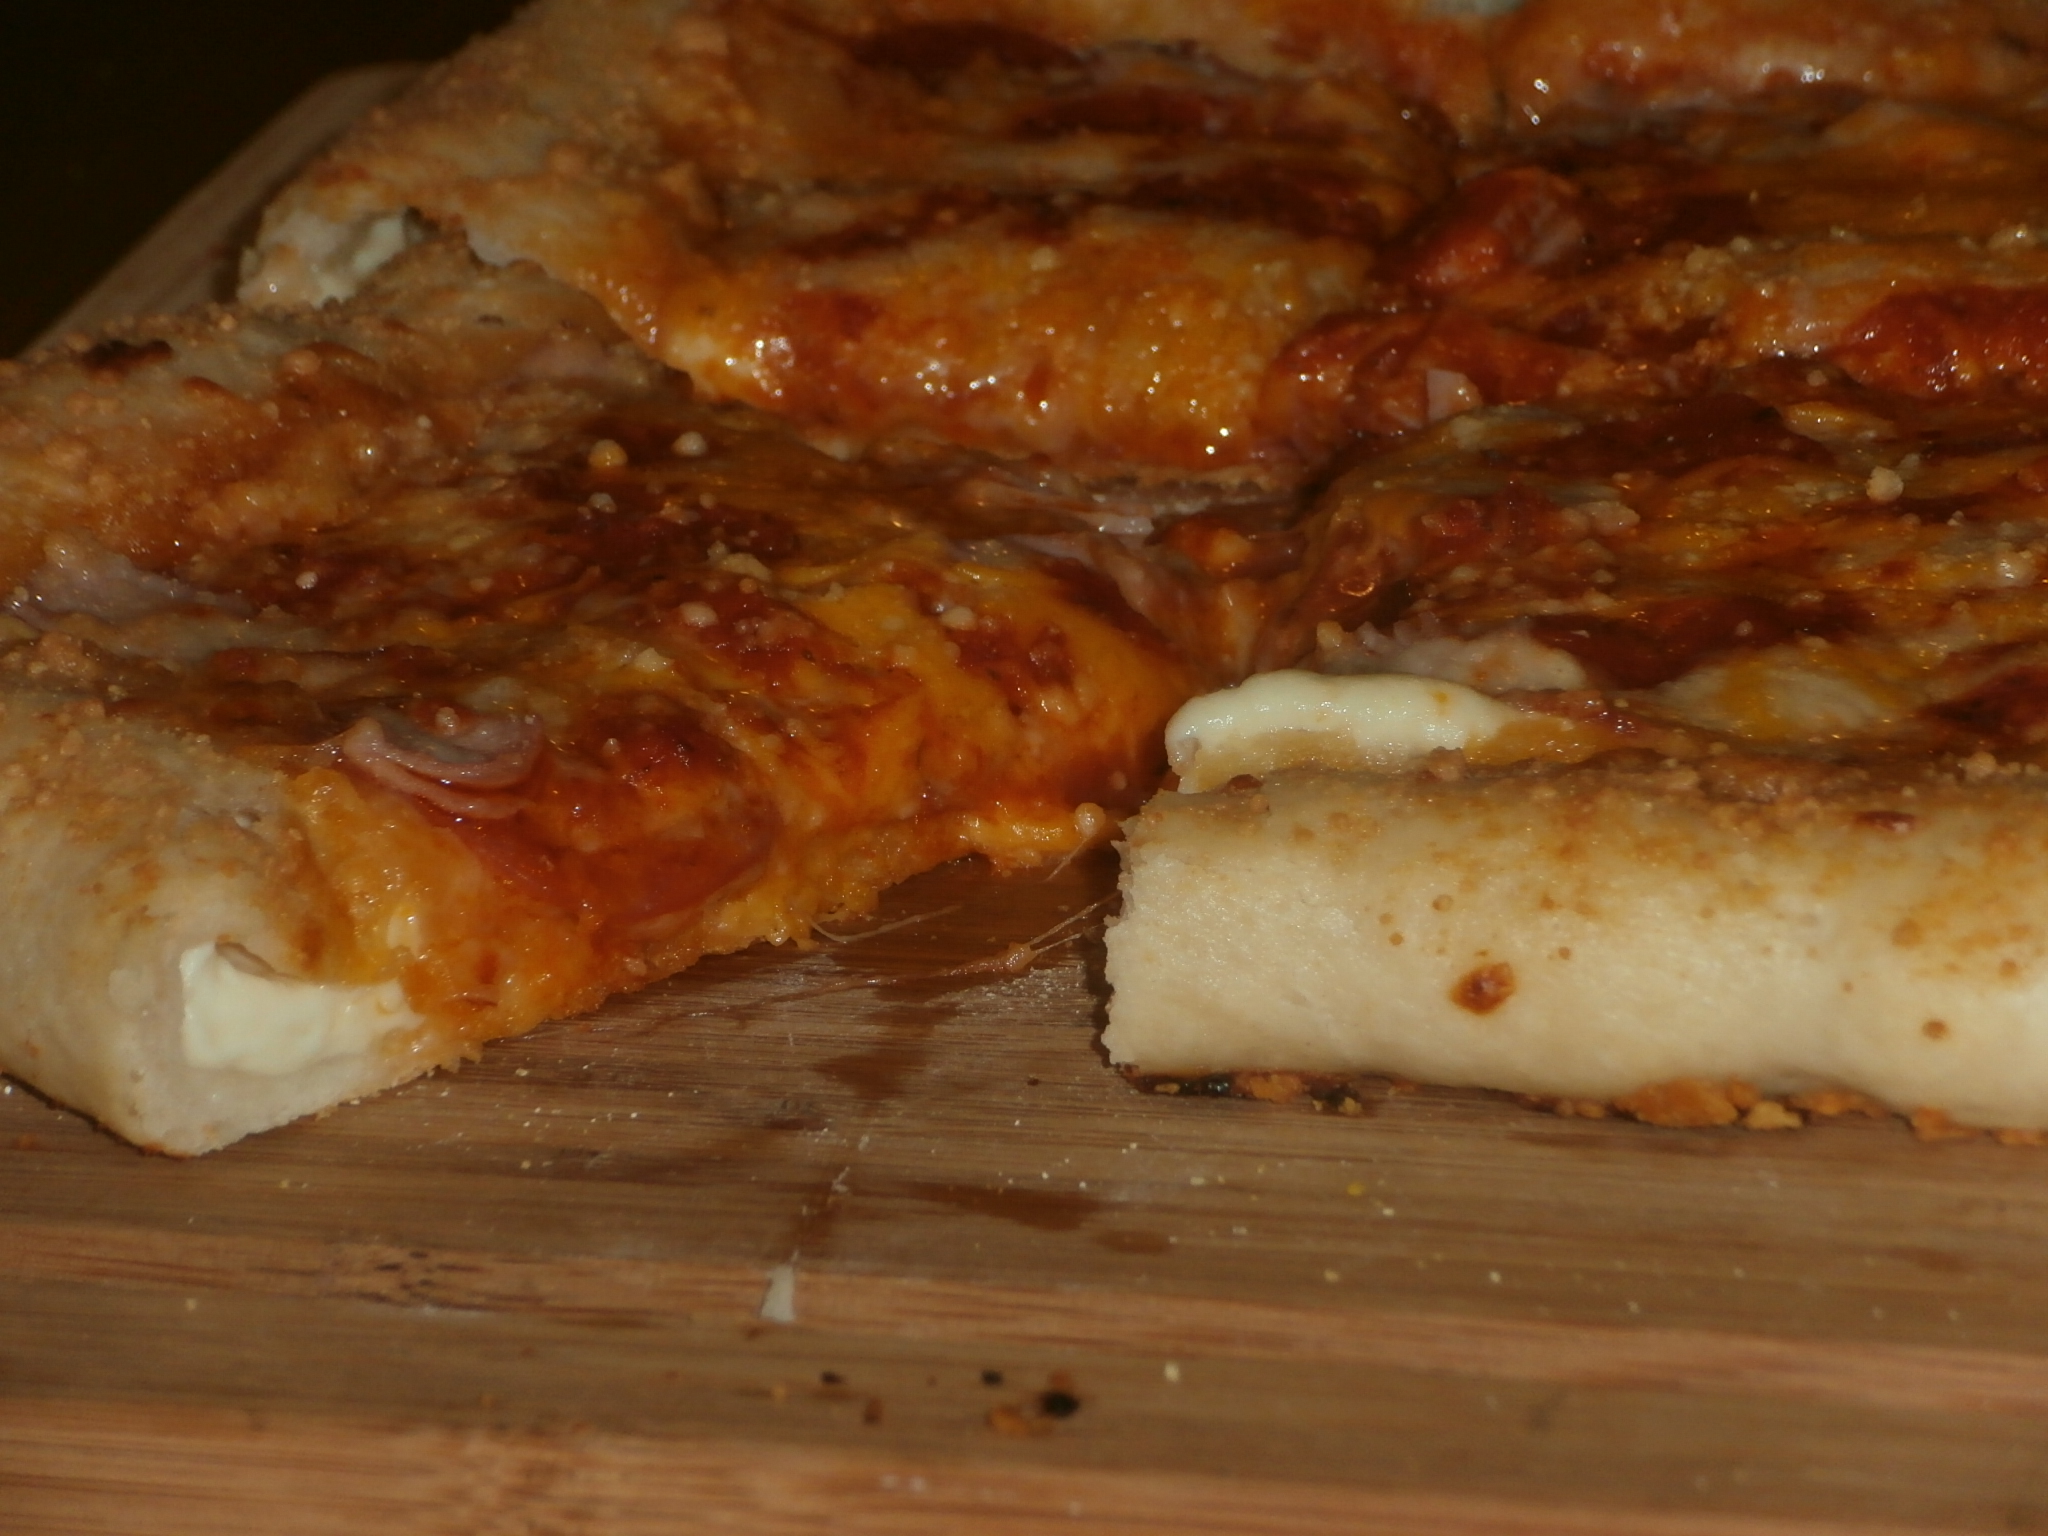 Homemade Stuffed Crust Pizza! #StuffedCrustPizza